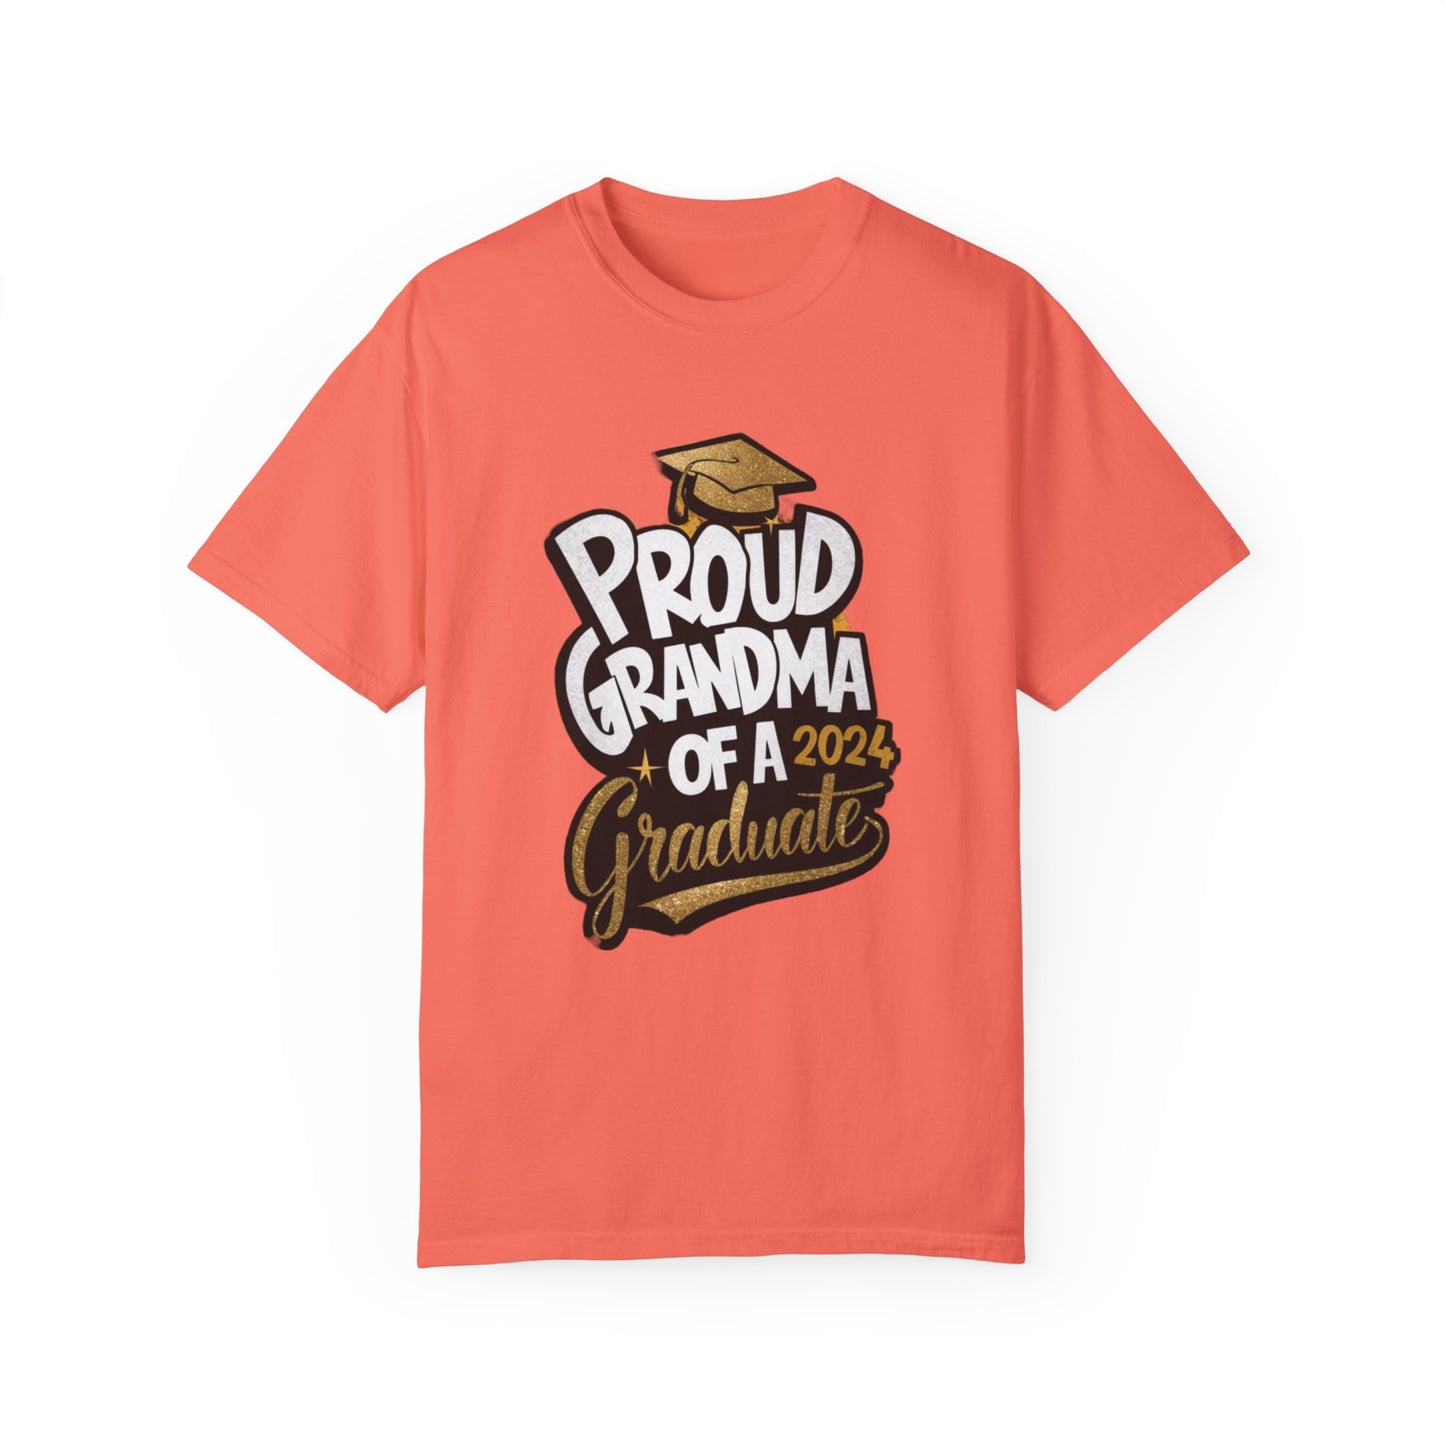 Proud of Grandma 2024 Graduate Unisex Garment-dyed T-shirt Cotton Funny Humorous Graphic Soft Premium Unisex Men Women Bright Salmon T-shirt Birthday Gift-6